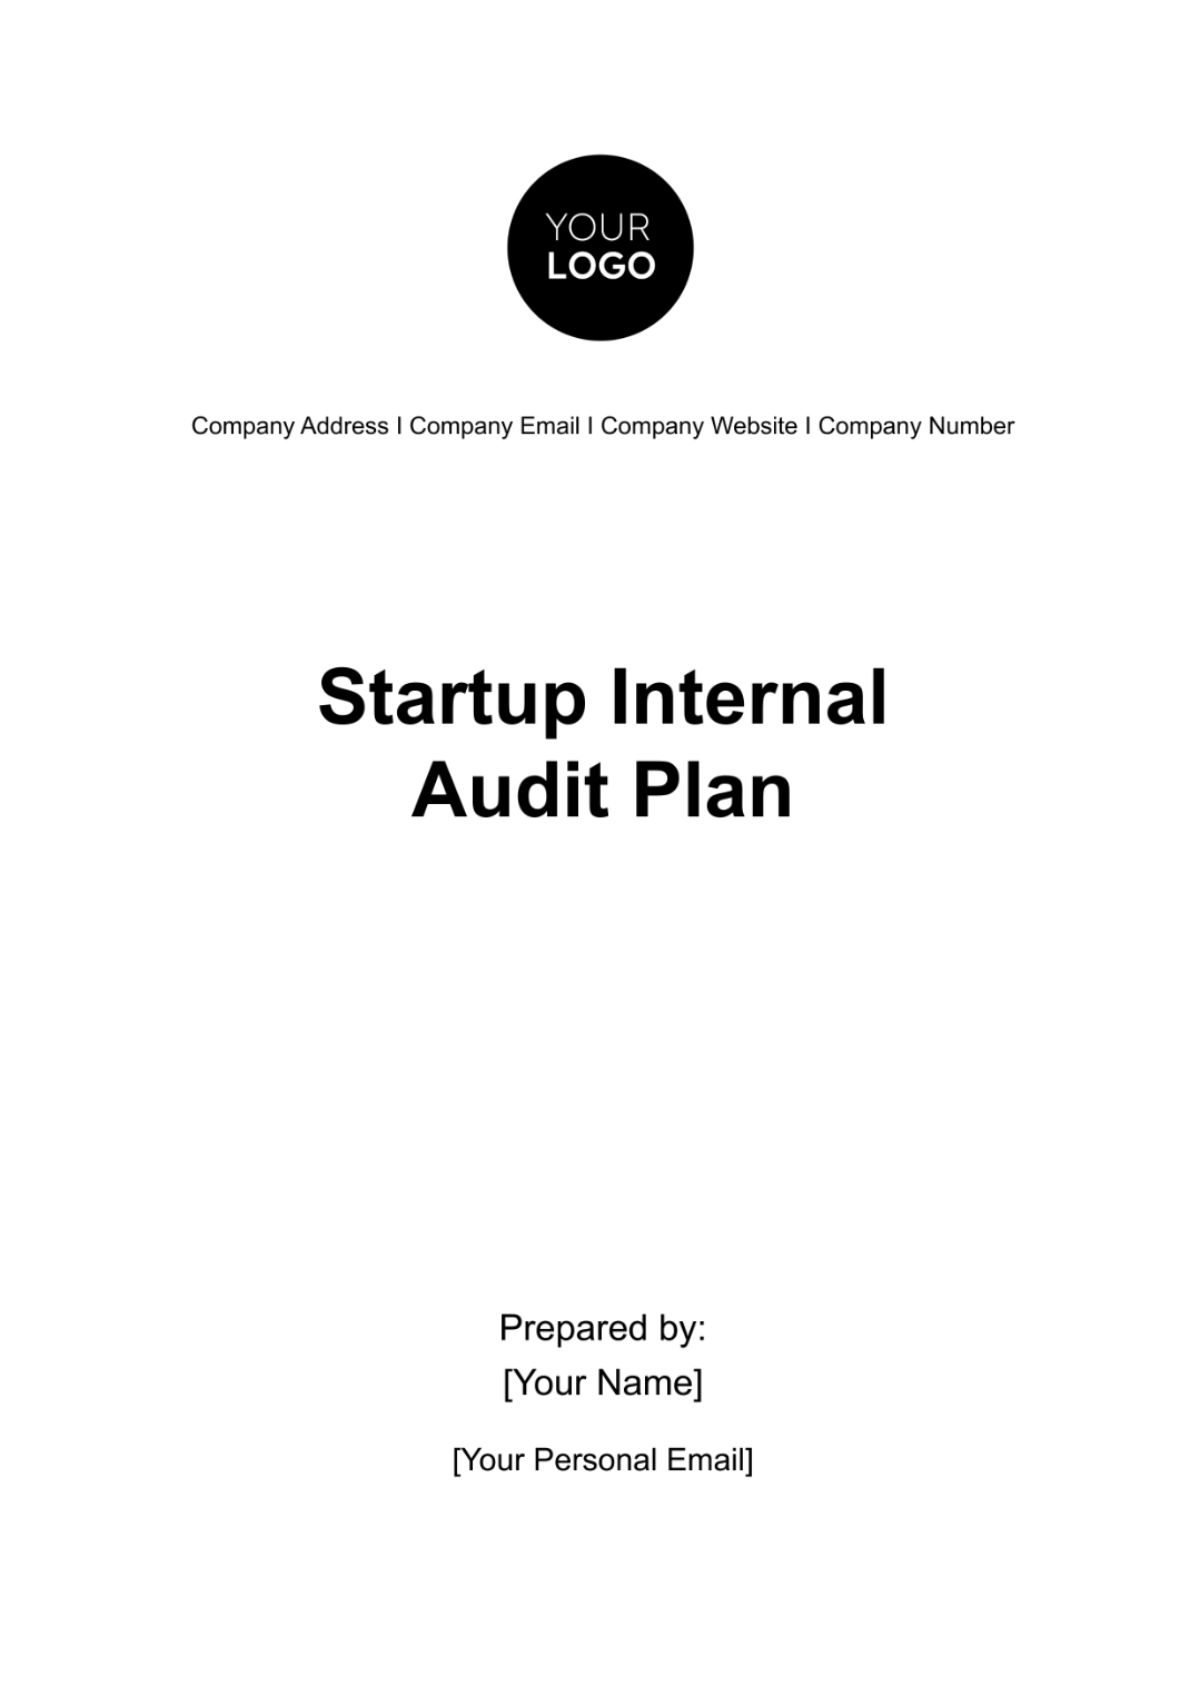 Startup Internal Audit Plan Template